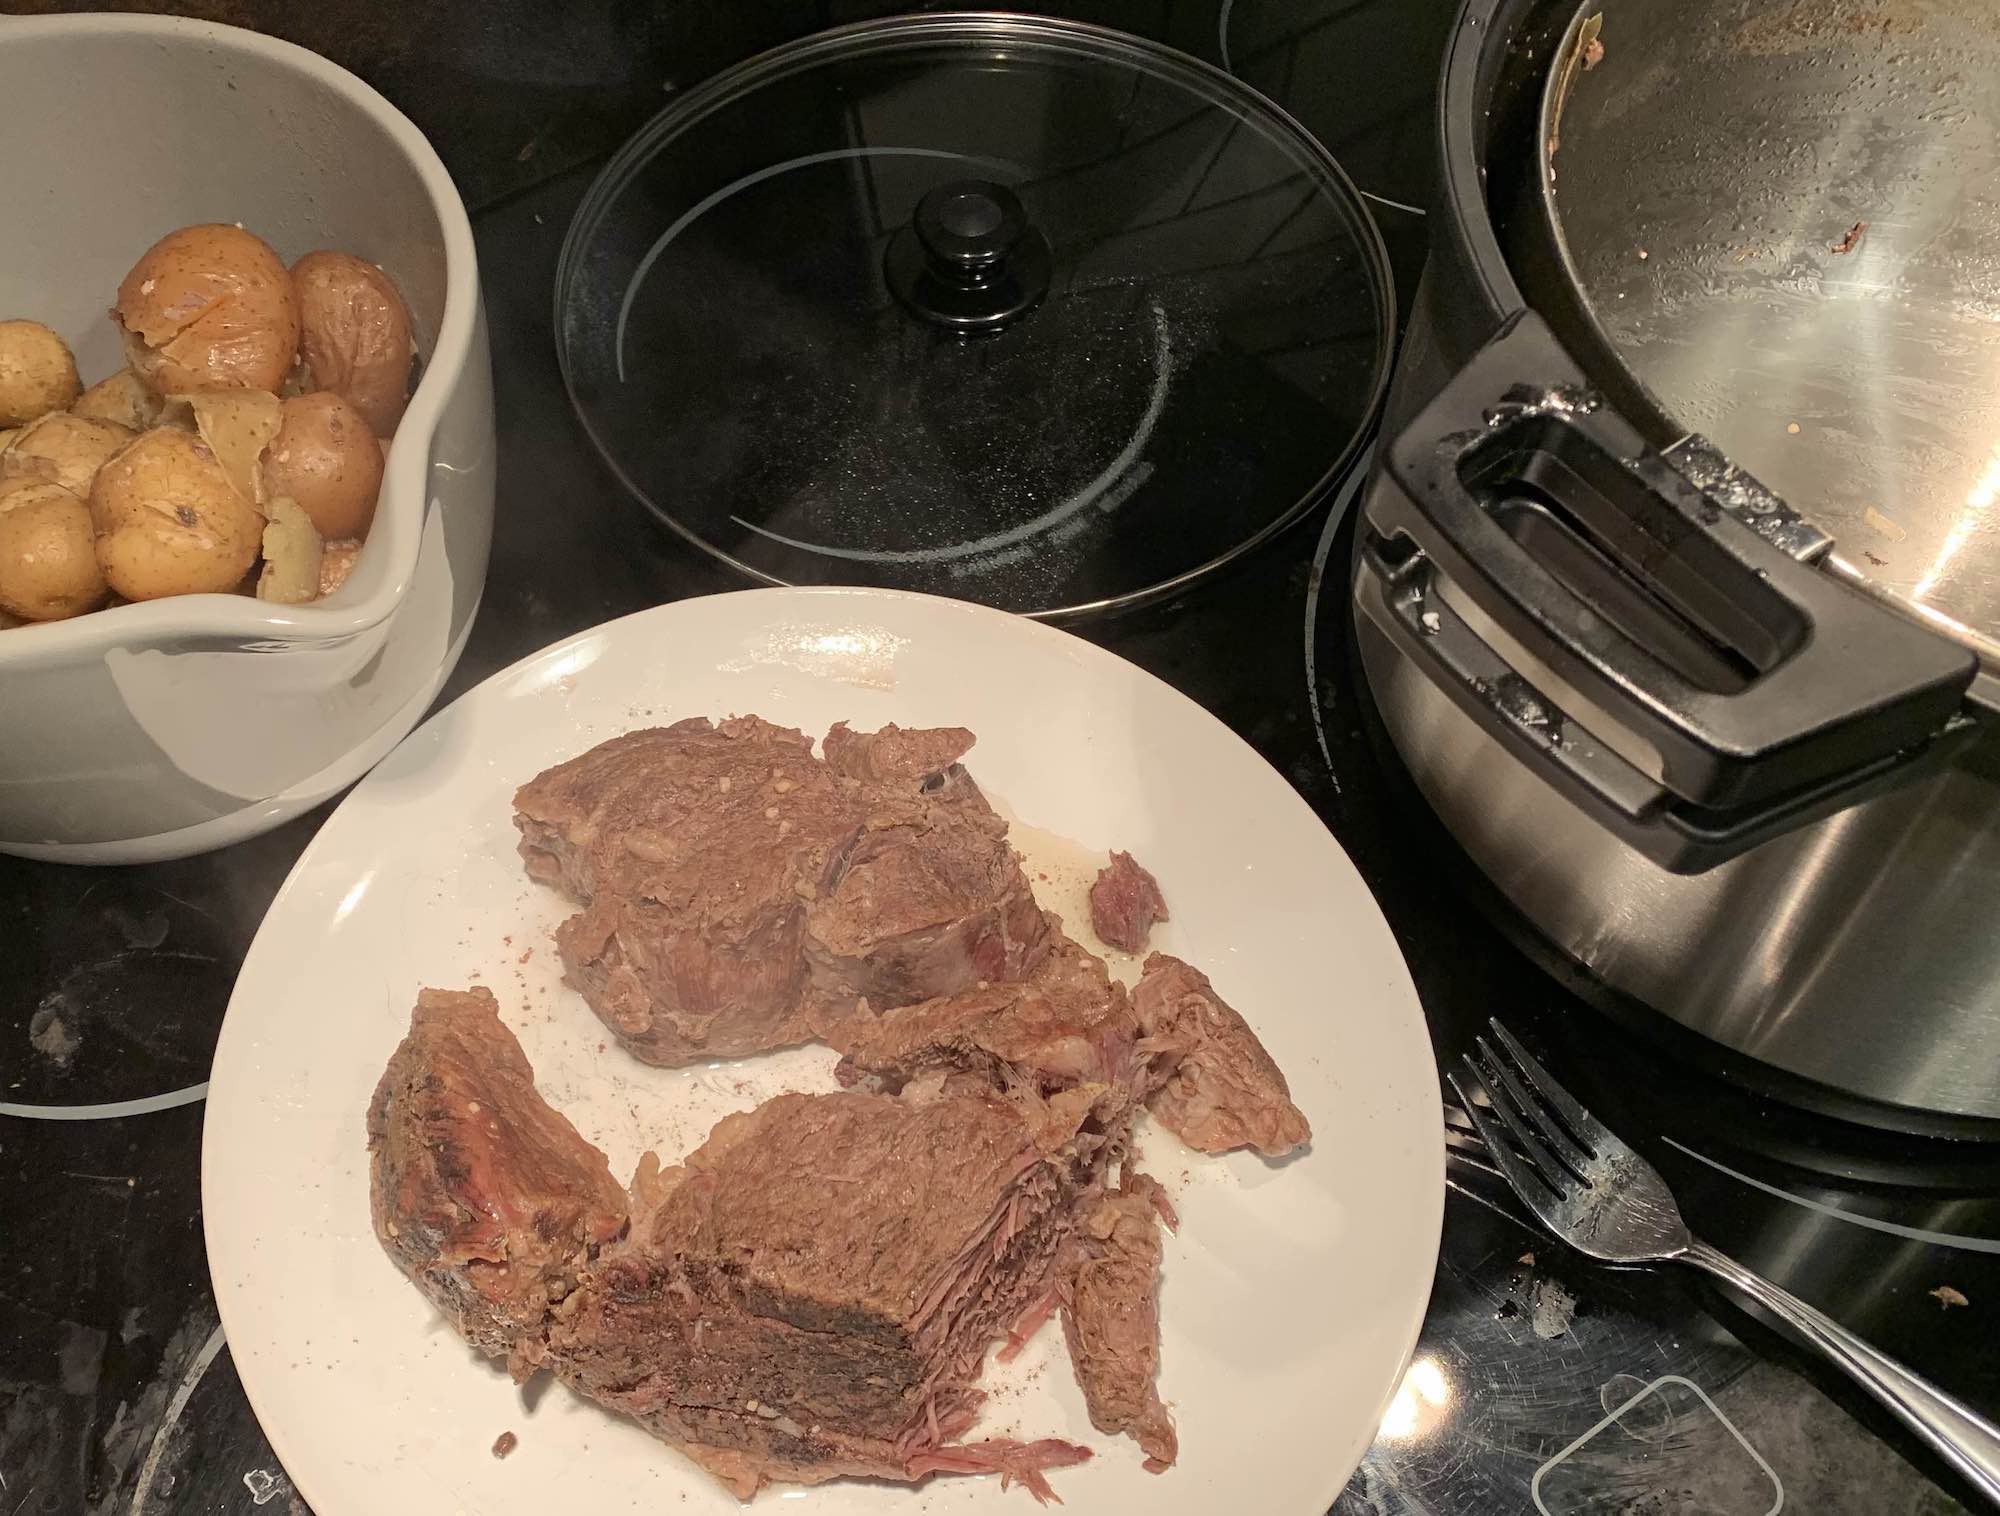 https://blog.bestbuy.ca/wp-content/uploads/2020/04/Tiger-Magic-Cooker-roast-beef-and-potatoes.jpg